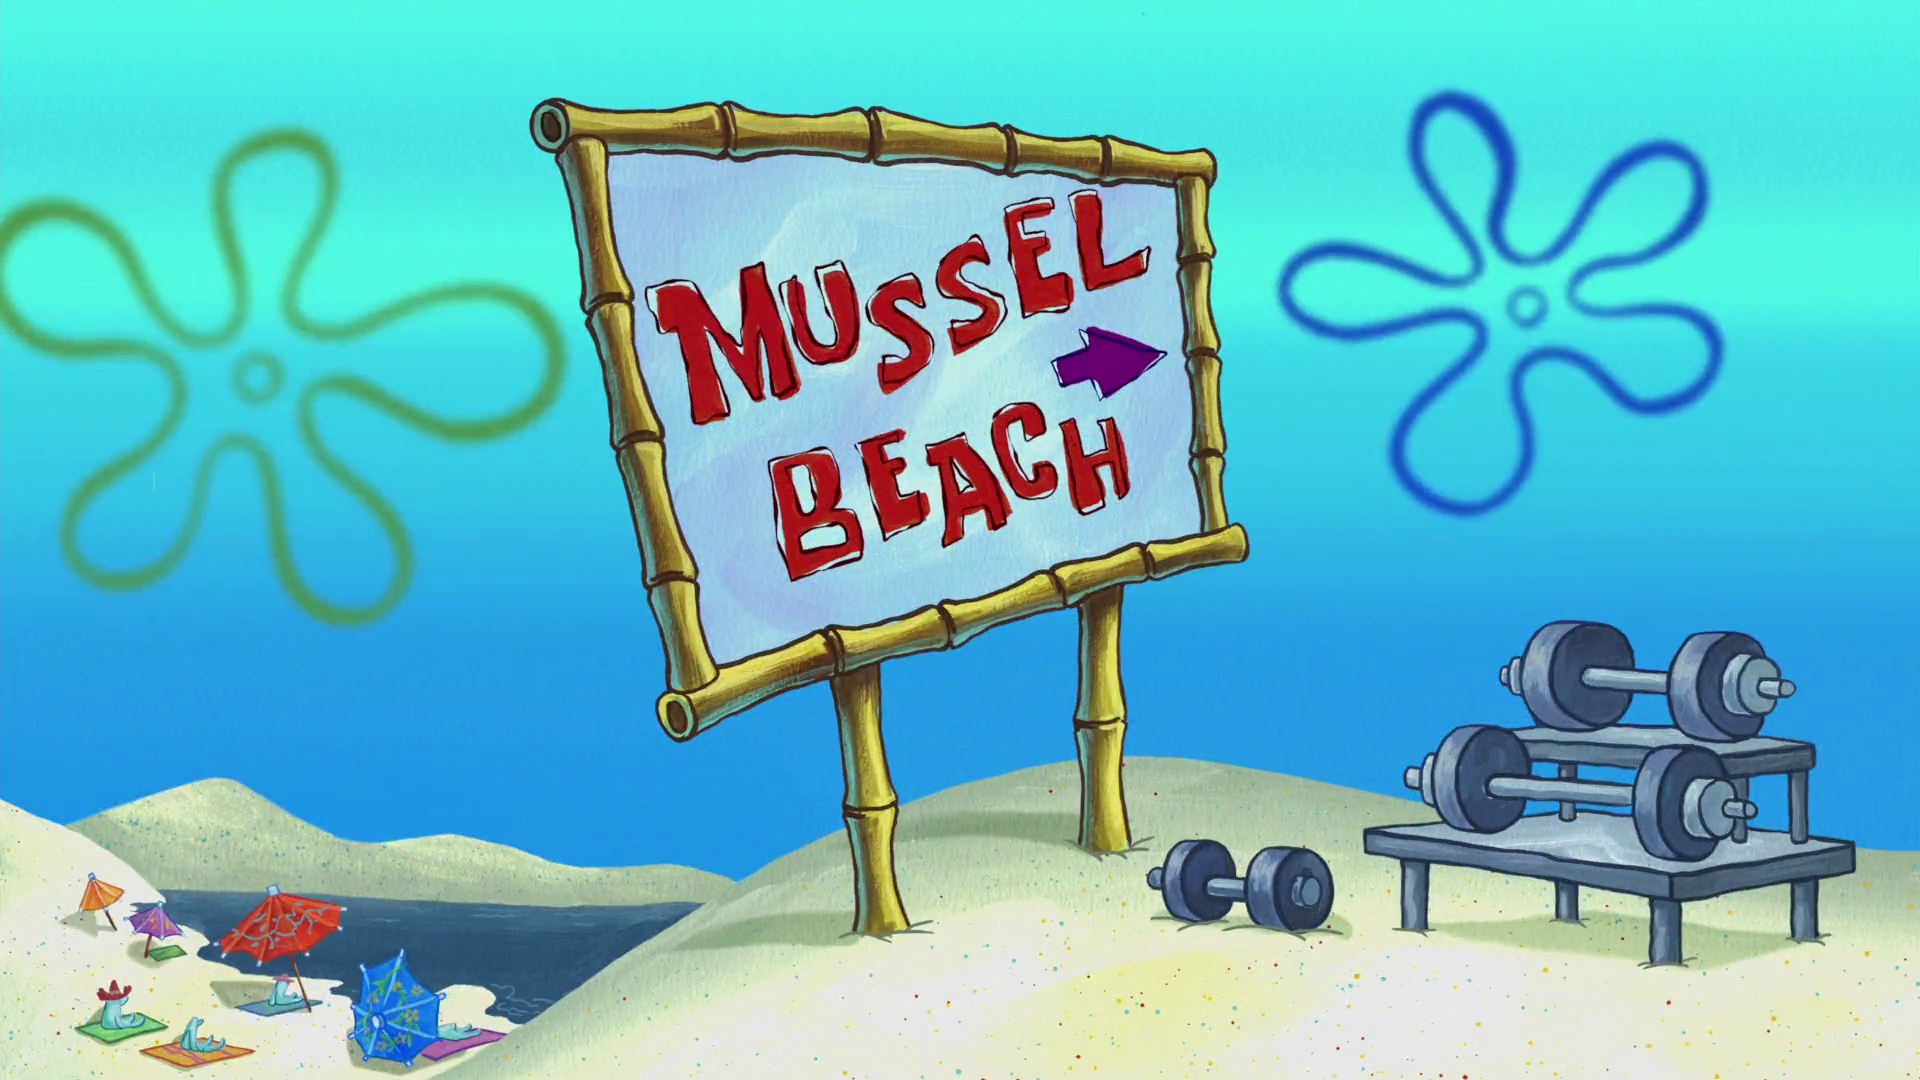 So essentially... in spongebob, mussel beach must be a brine pool, only log...